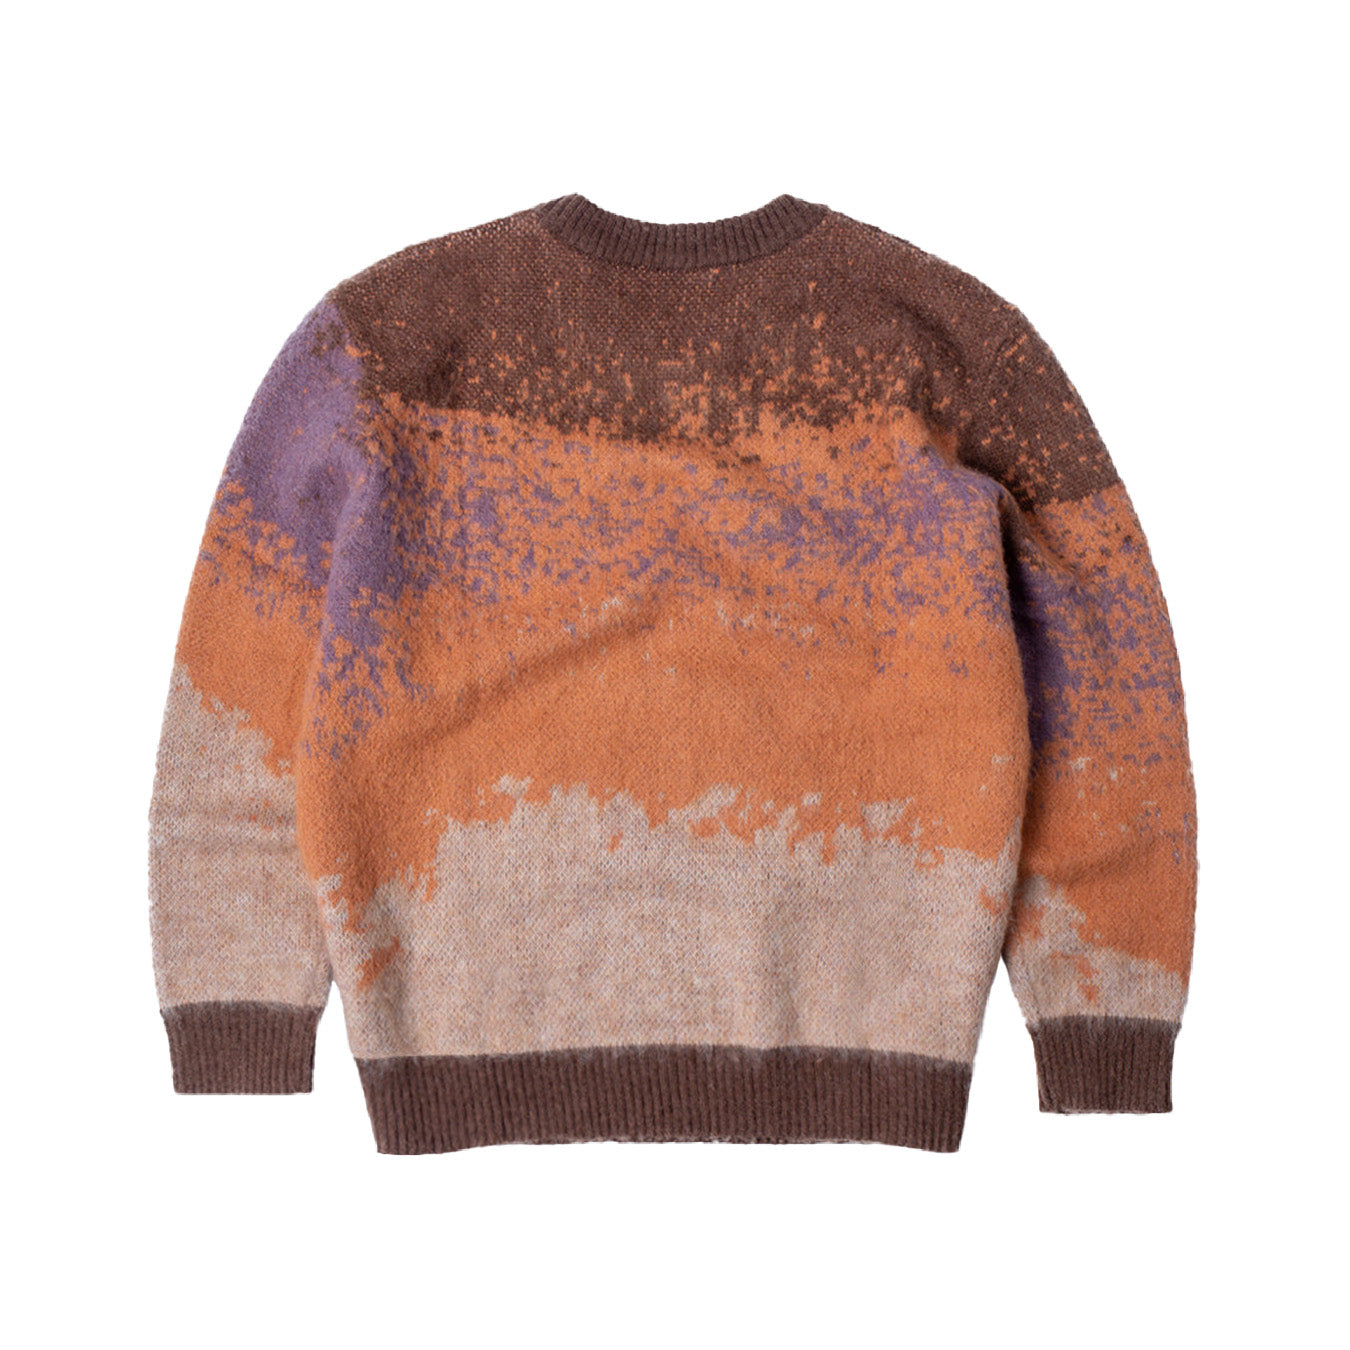 Sundown Mohair Knit Sweater, Multi